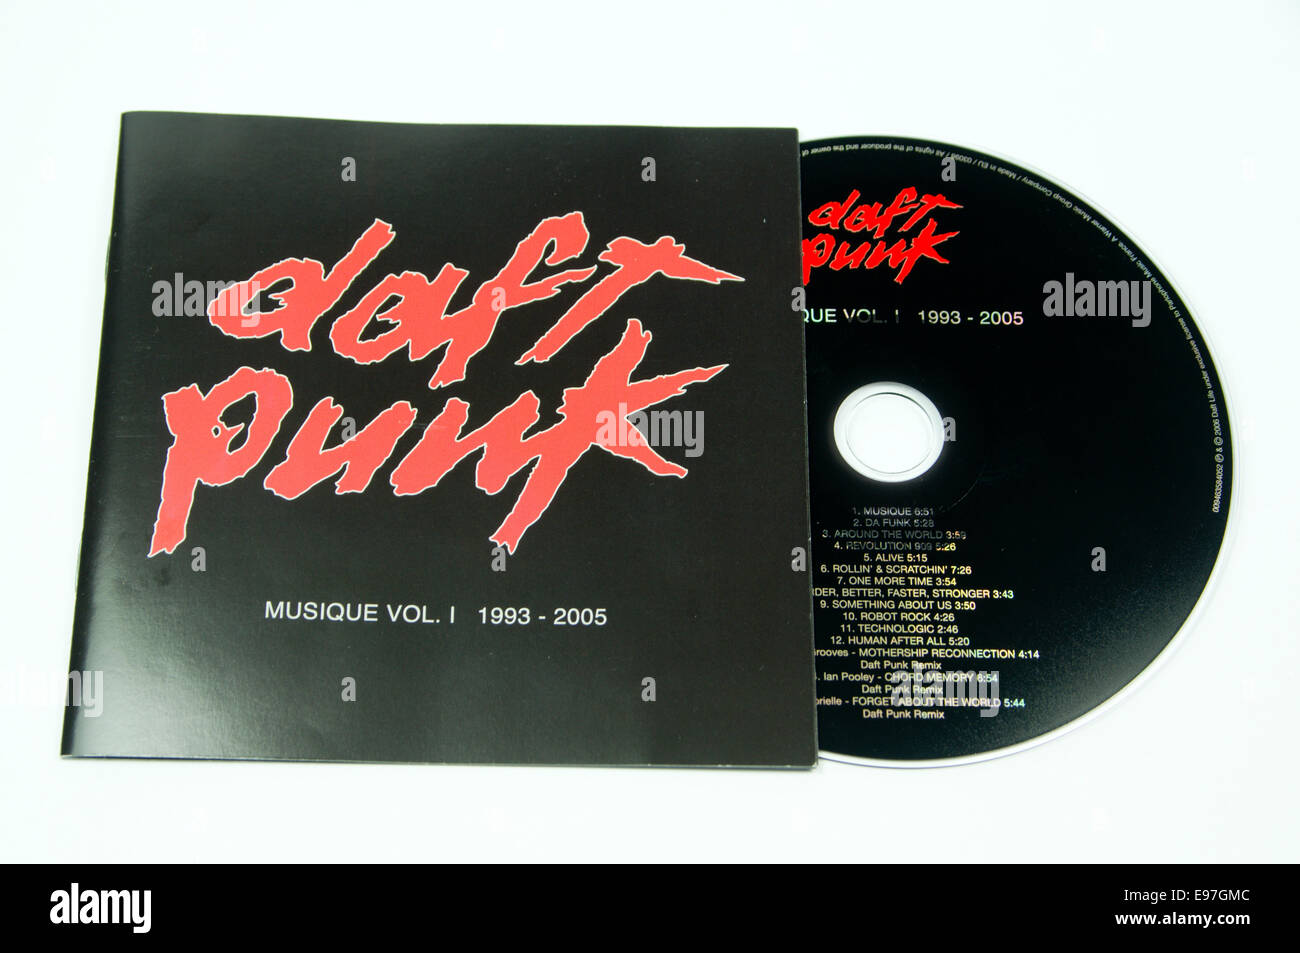 Daft Punk Musique vol 1 Album compact disc. Stock Photo